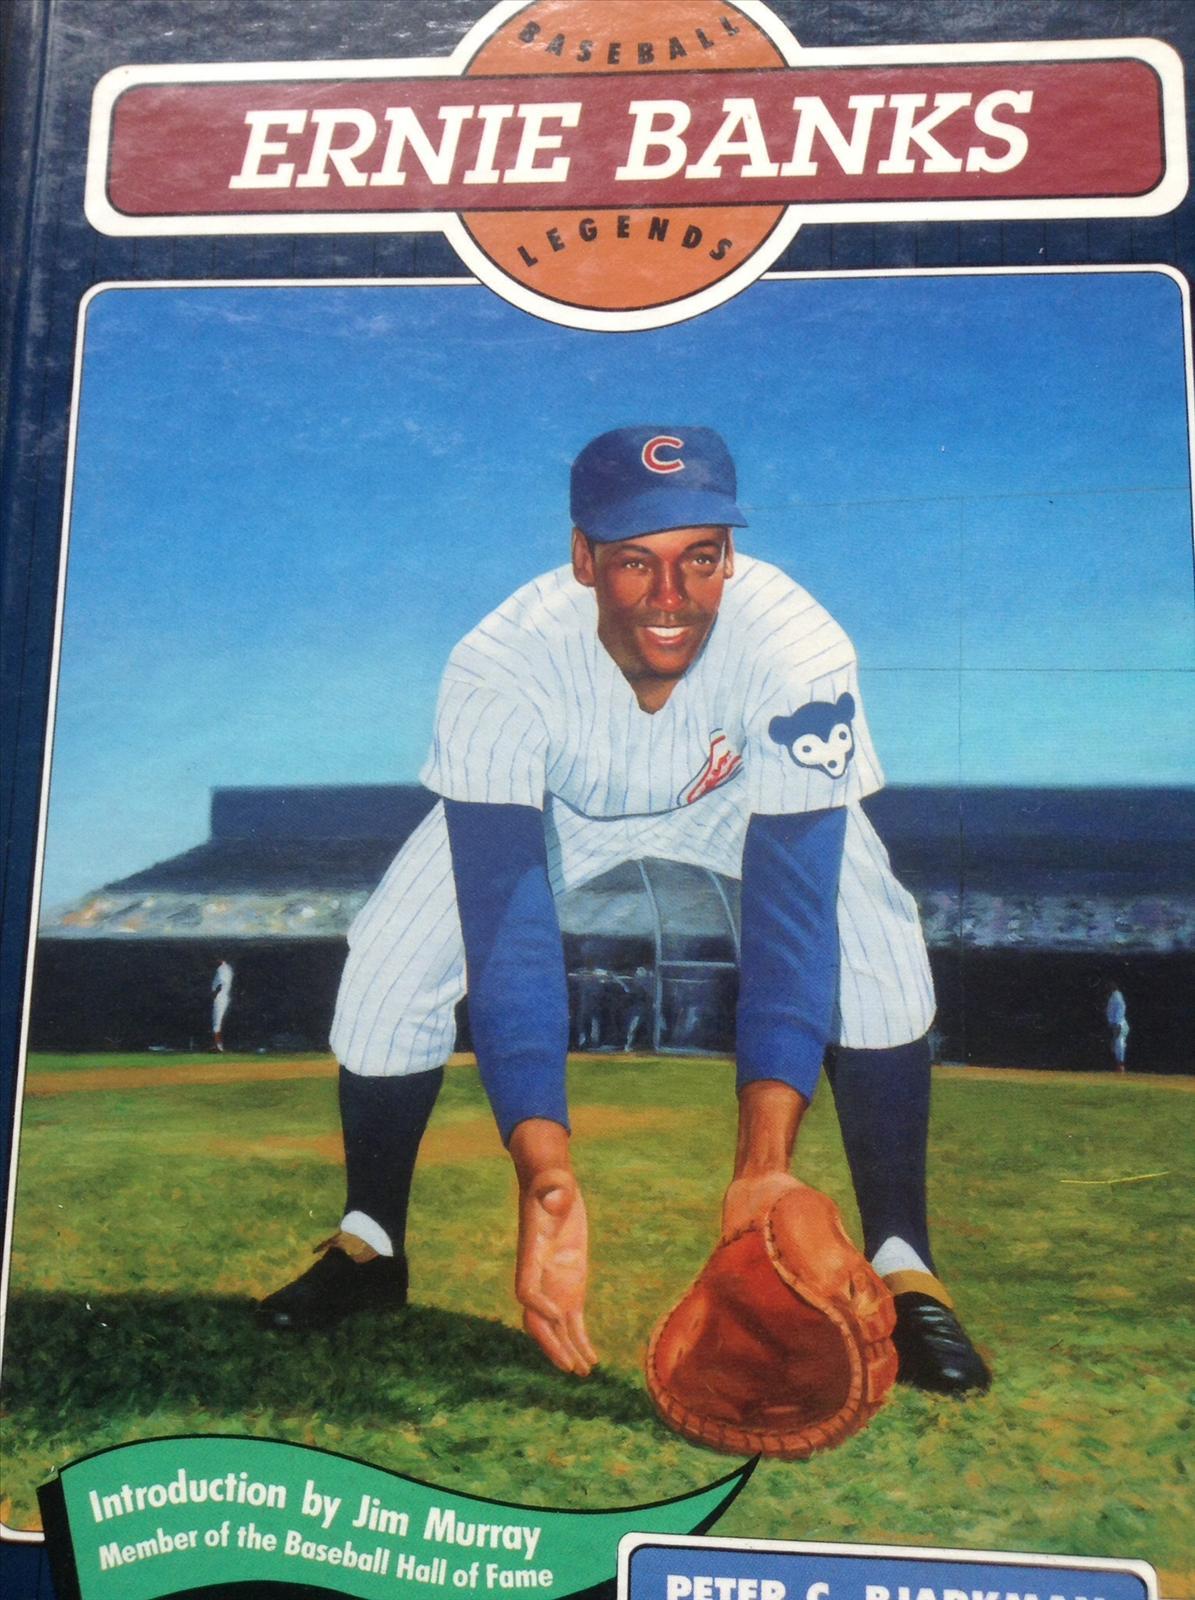 Ernie Banks' legacy extends far beyond Mr. Cub status